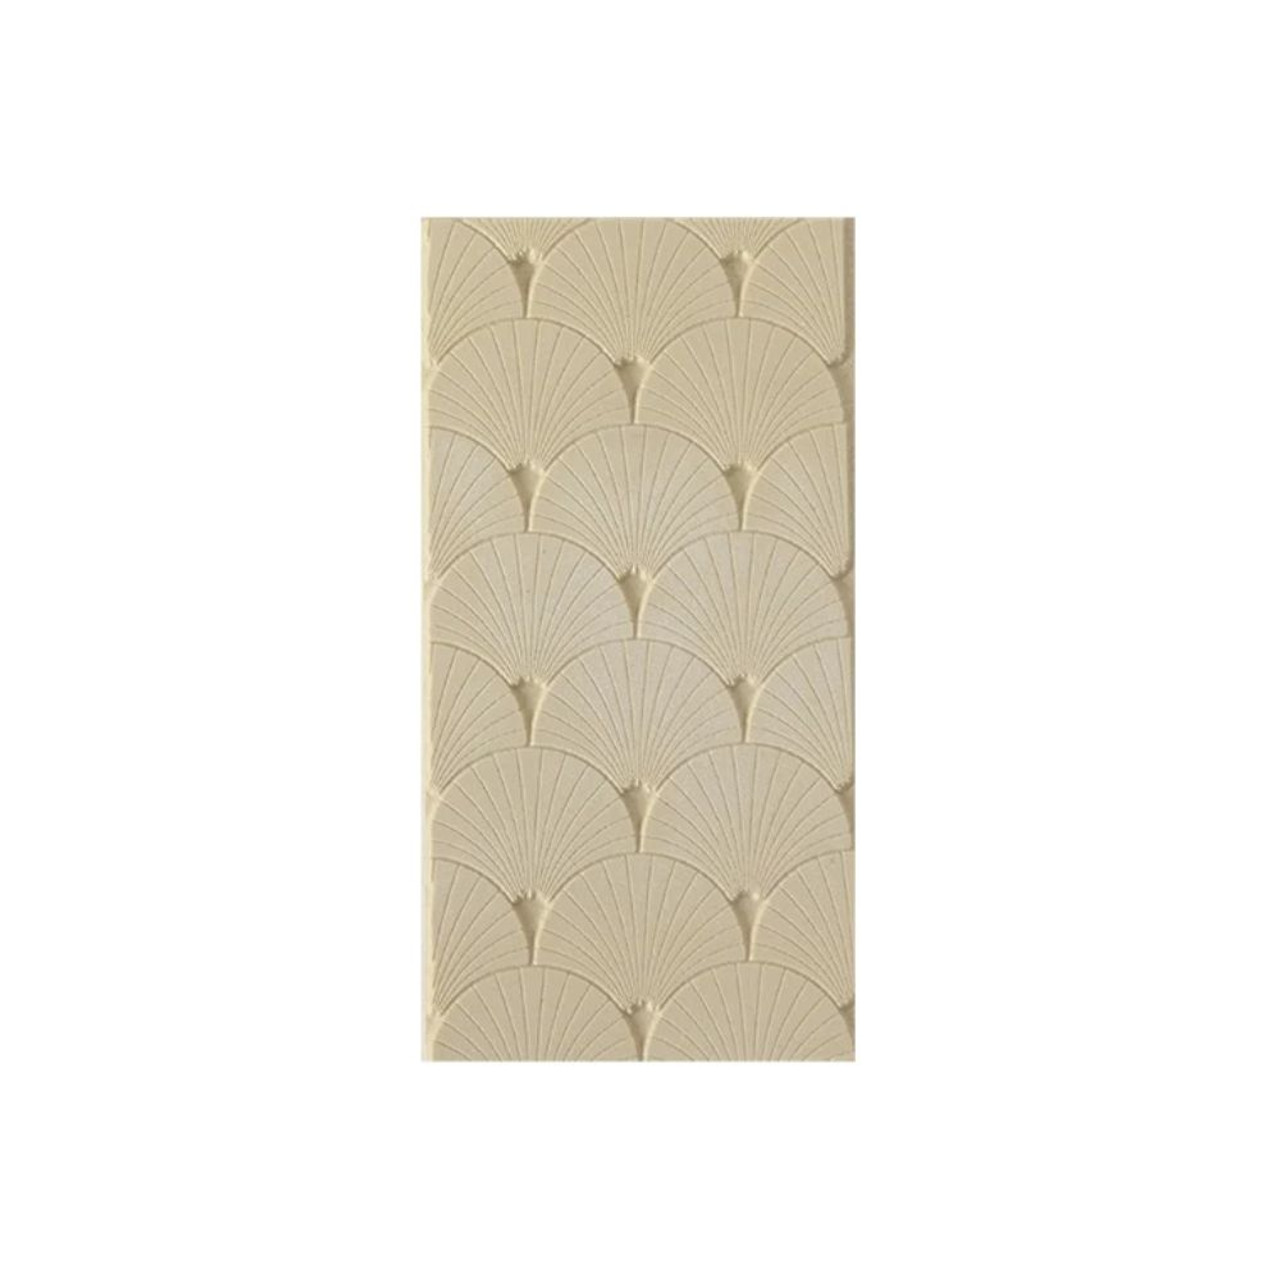 Texture Tile -Fan-Tastic Embossed